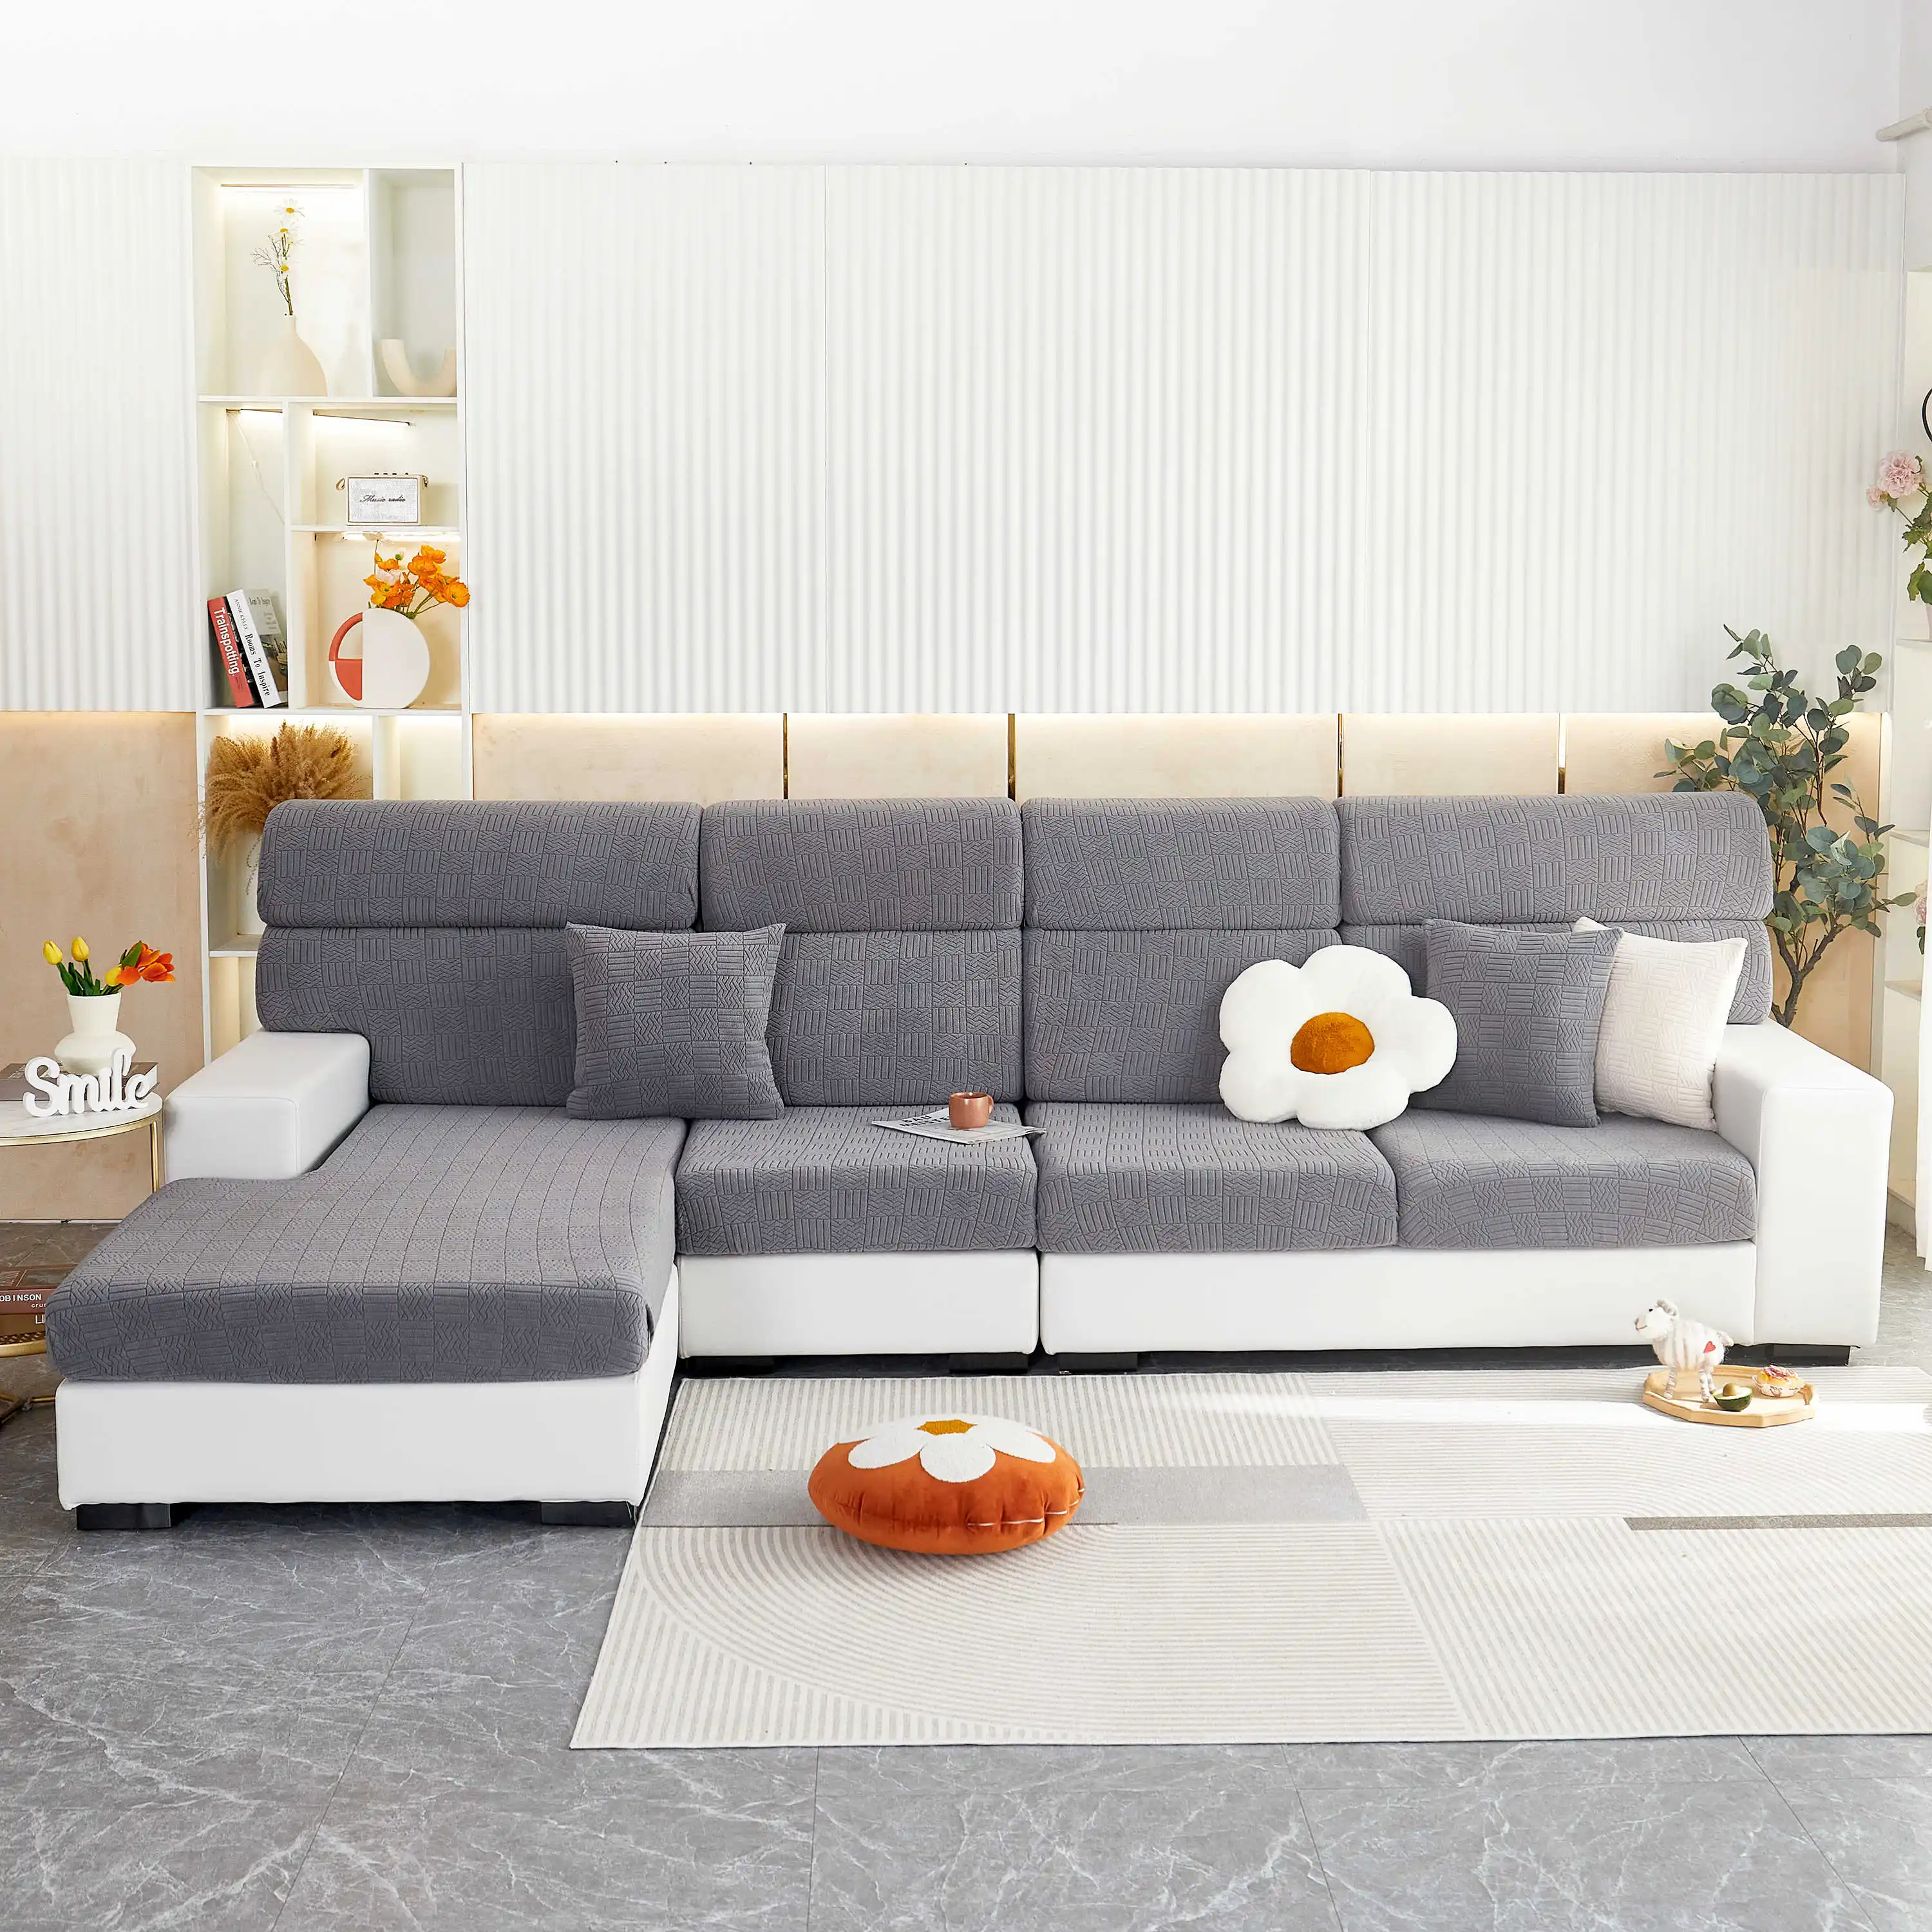 Jane Eyre Polar Fleece High-elastic Wholesale Sofa Slipcover House Decoration for Sofa Durable Furniture Protector